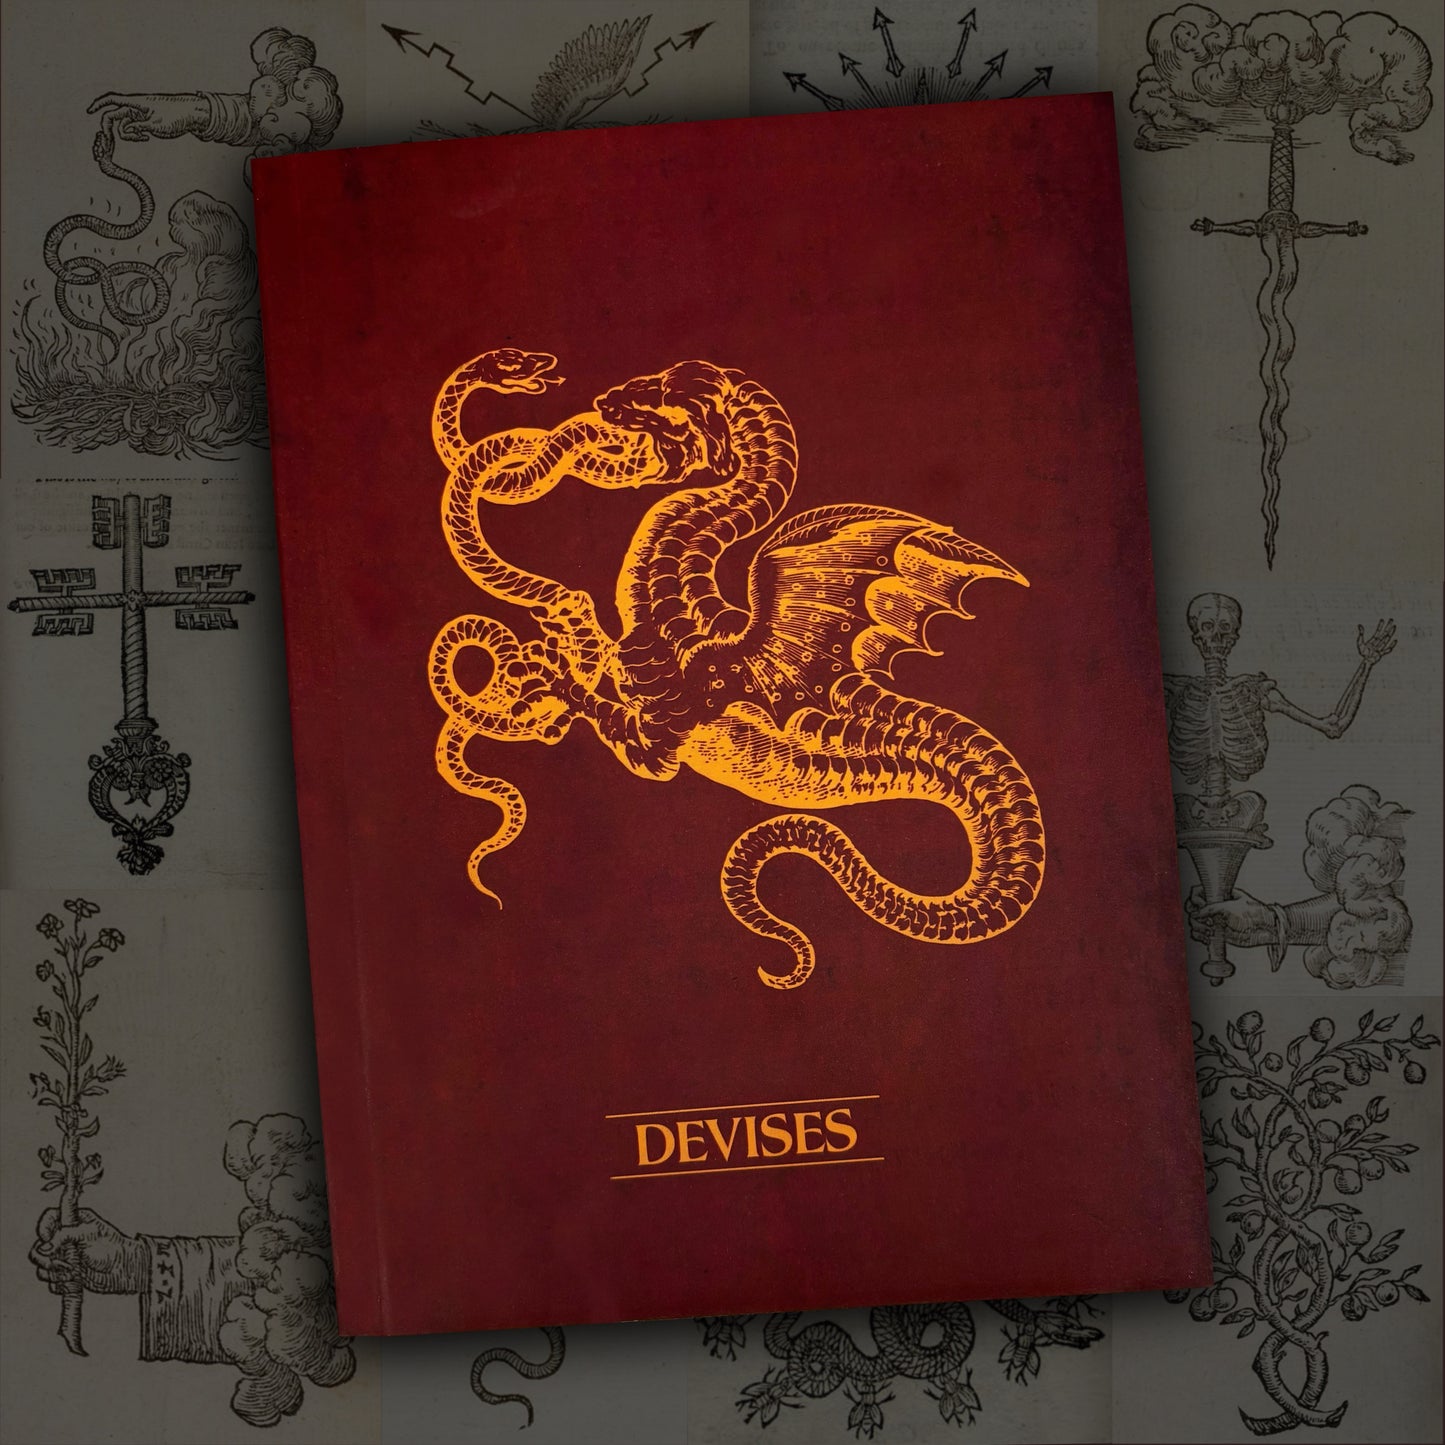 The DEVISES Book